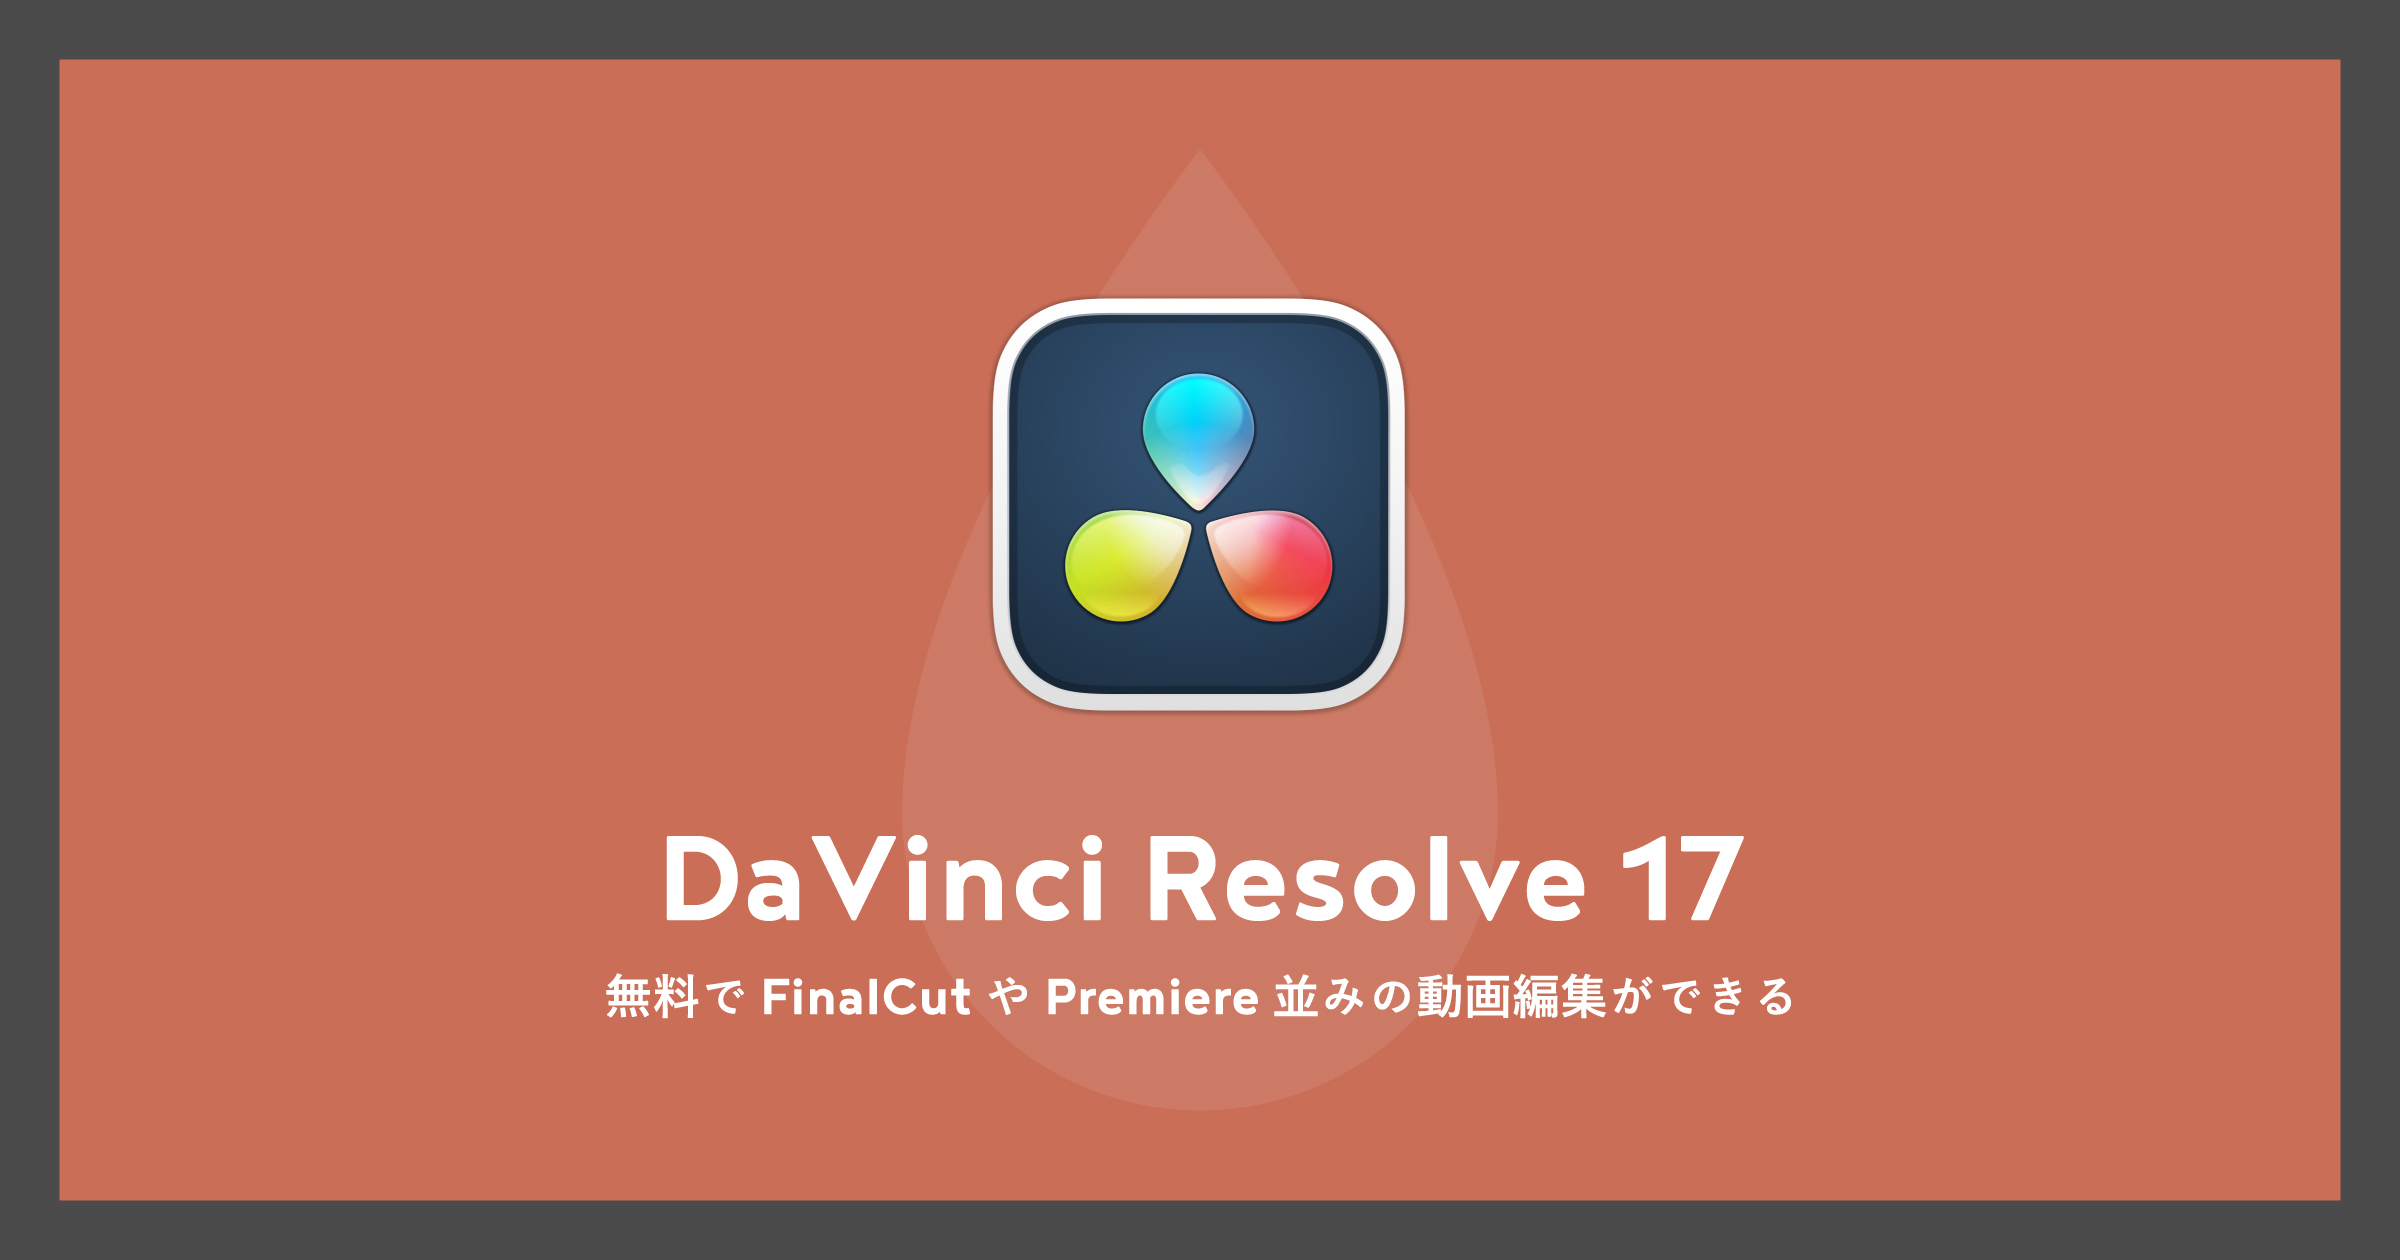 「[Mac,Win,Linux]無料でFinalCutやPremiere並みの動画編集ができる、DaVinciResolve17」のアイキャッチ画像